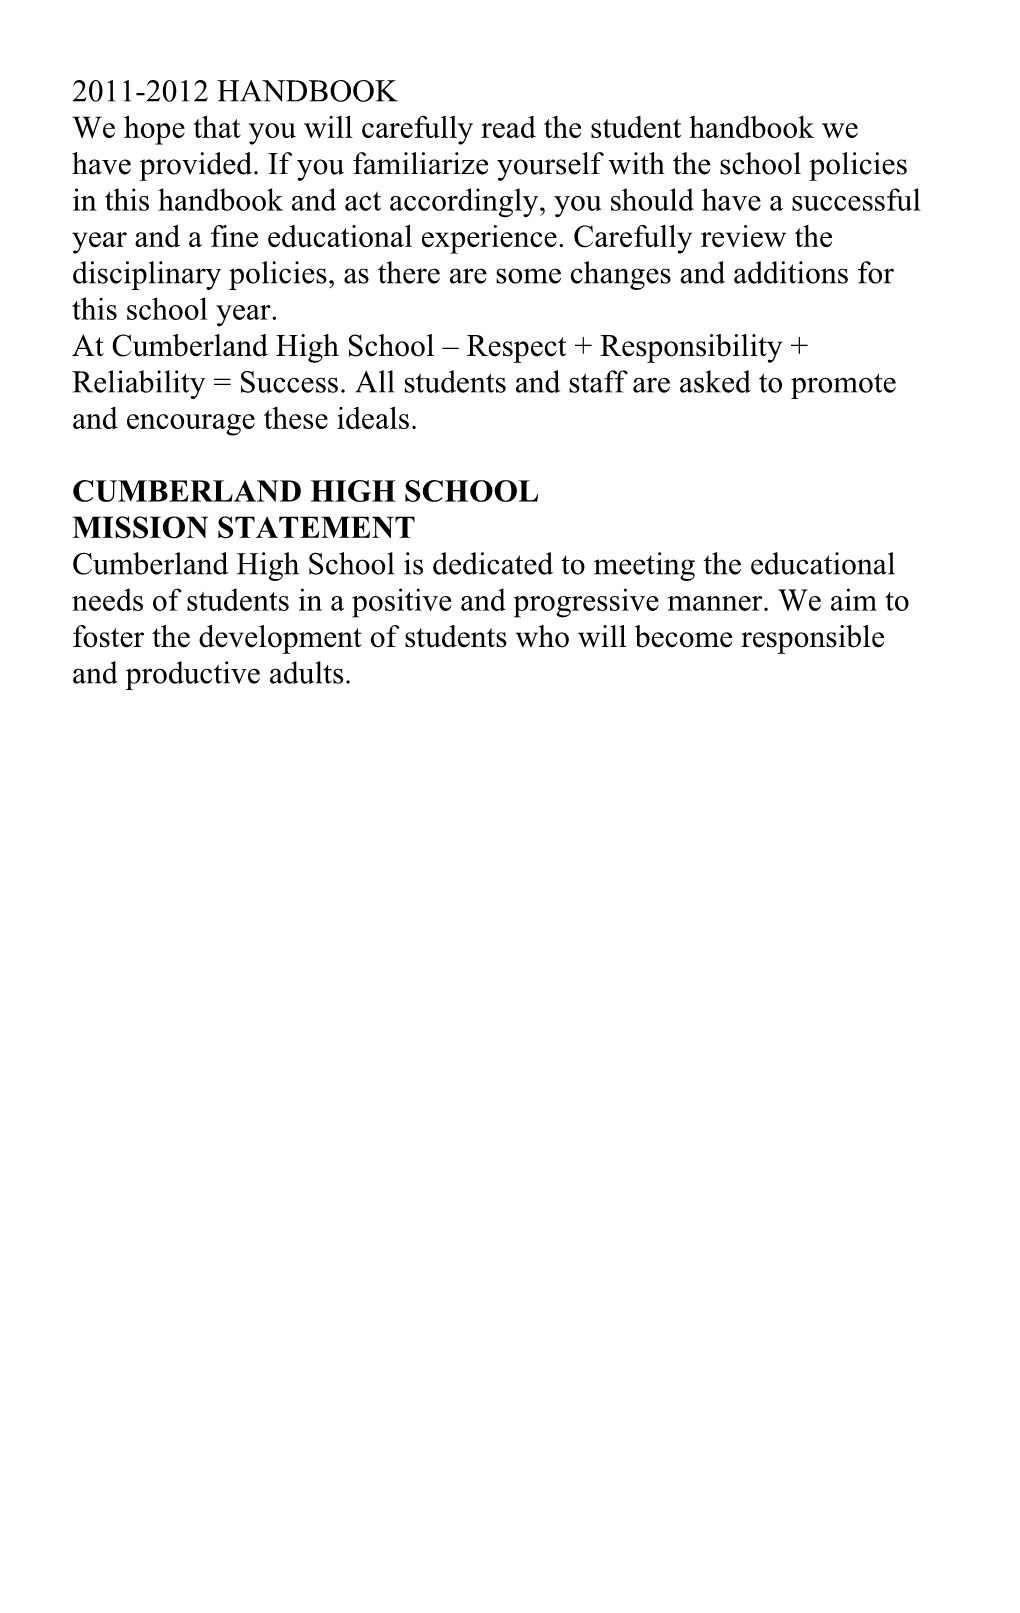 Cumberland High School Mission Statement